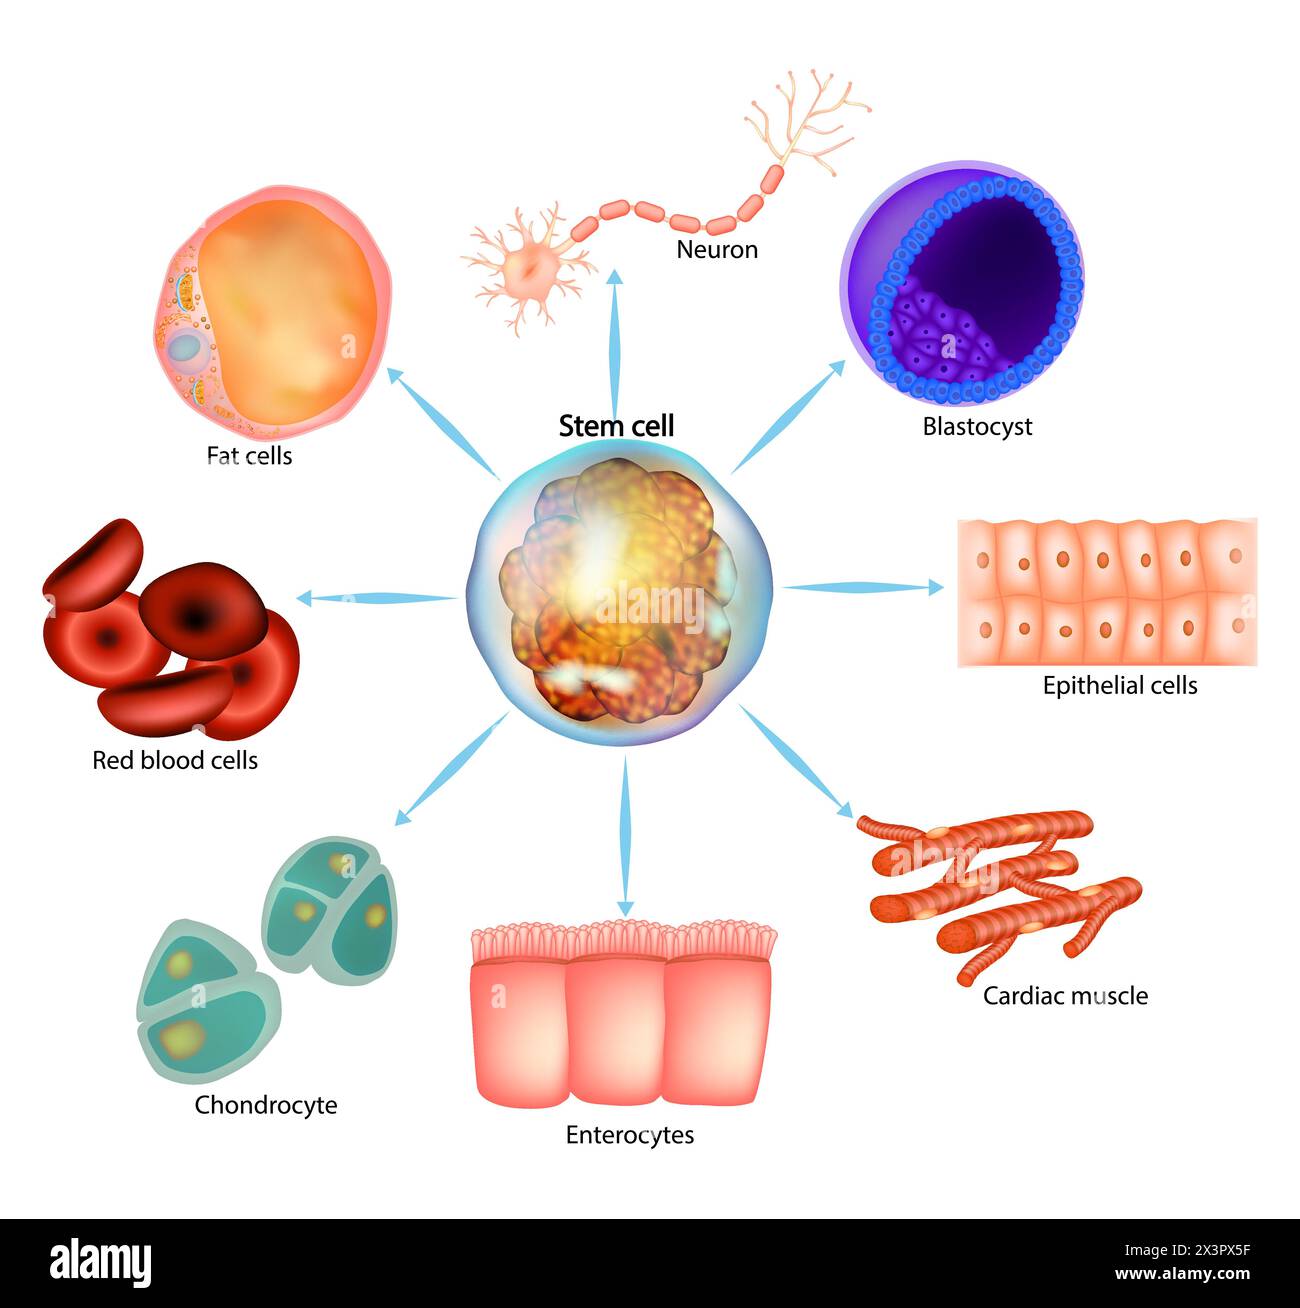 Stem cell. Blastocyst, Neuron, Epithelial, Enterocytes, Fat, blood, Chondrocyte, Cardiac muscle, Stock Vector